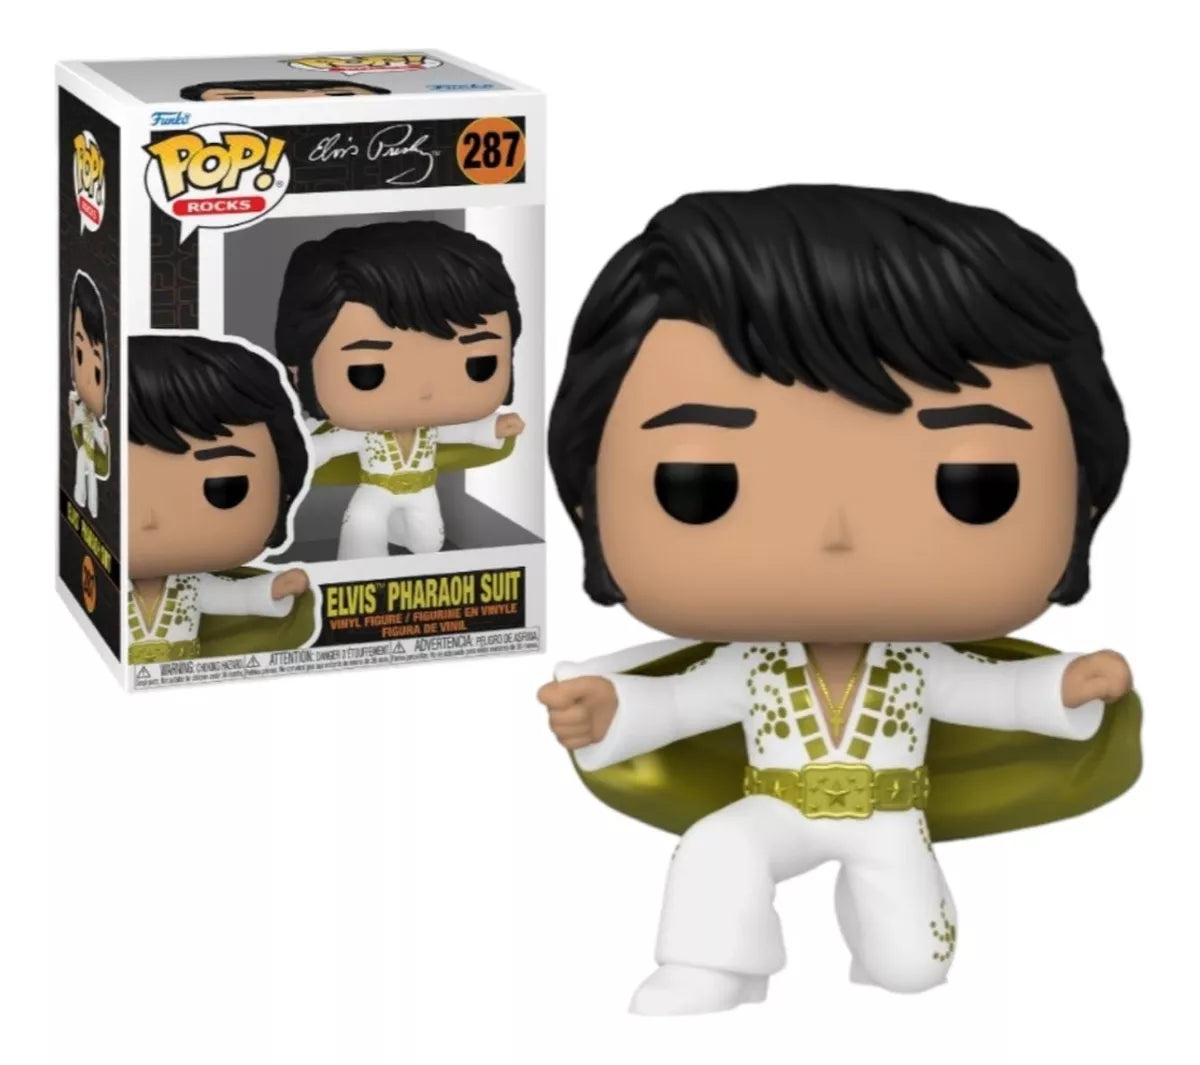 Elvis Pharaoh Suit #287